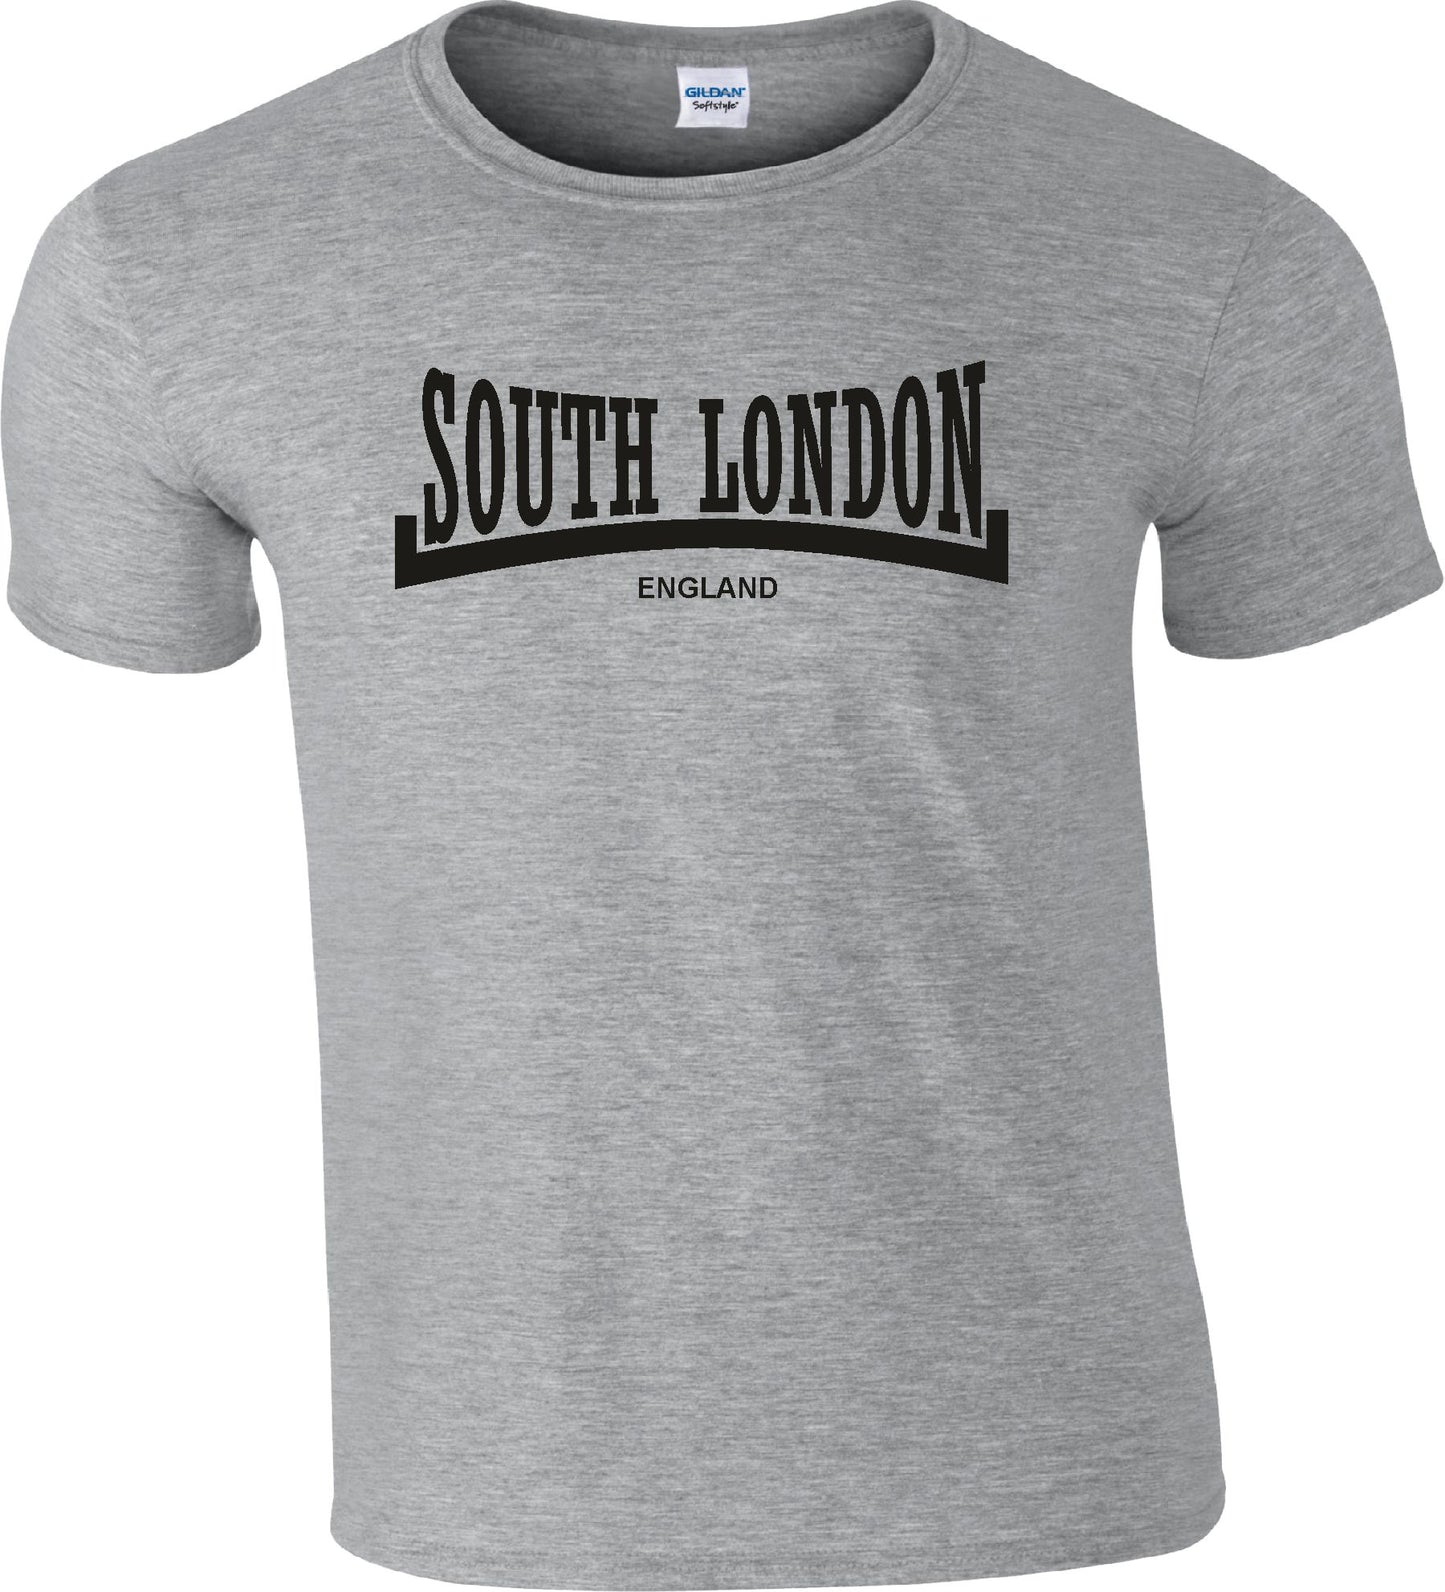 South London T-Shirt - London Souvenir, Custom Print Available, Various Colours